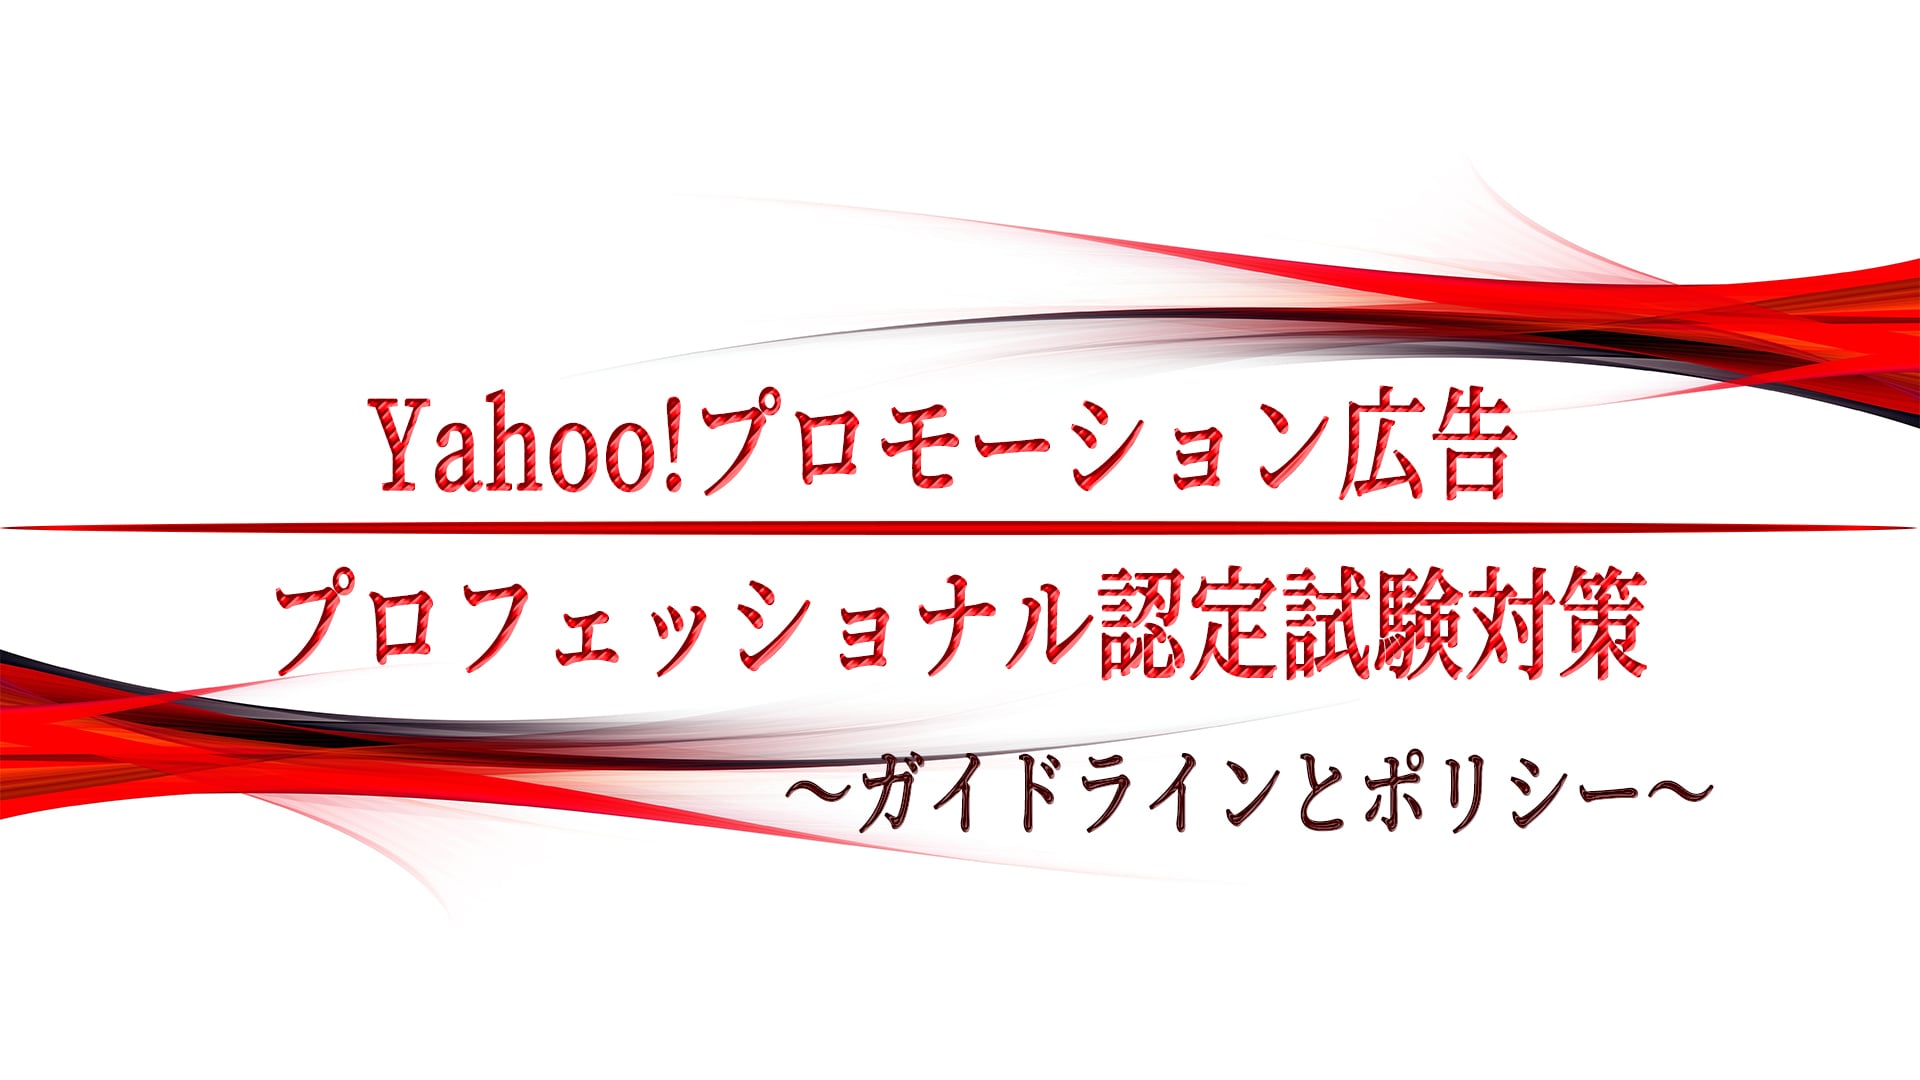 Yahoo!プロモーション広告 プロフェッショナル認定試験対策 〜ガイドラインとポリシー〜